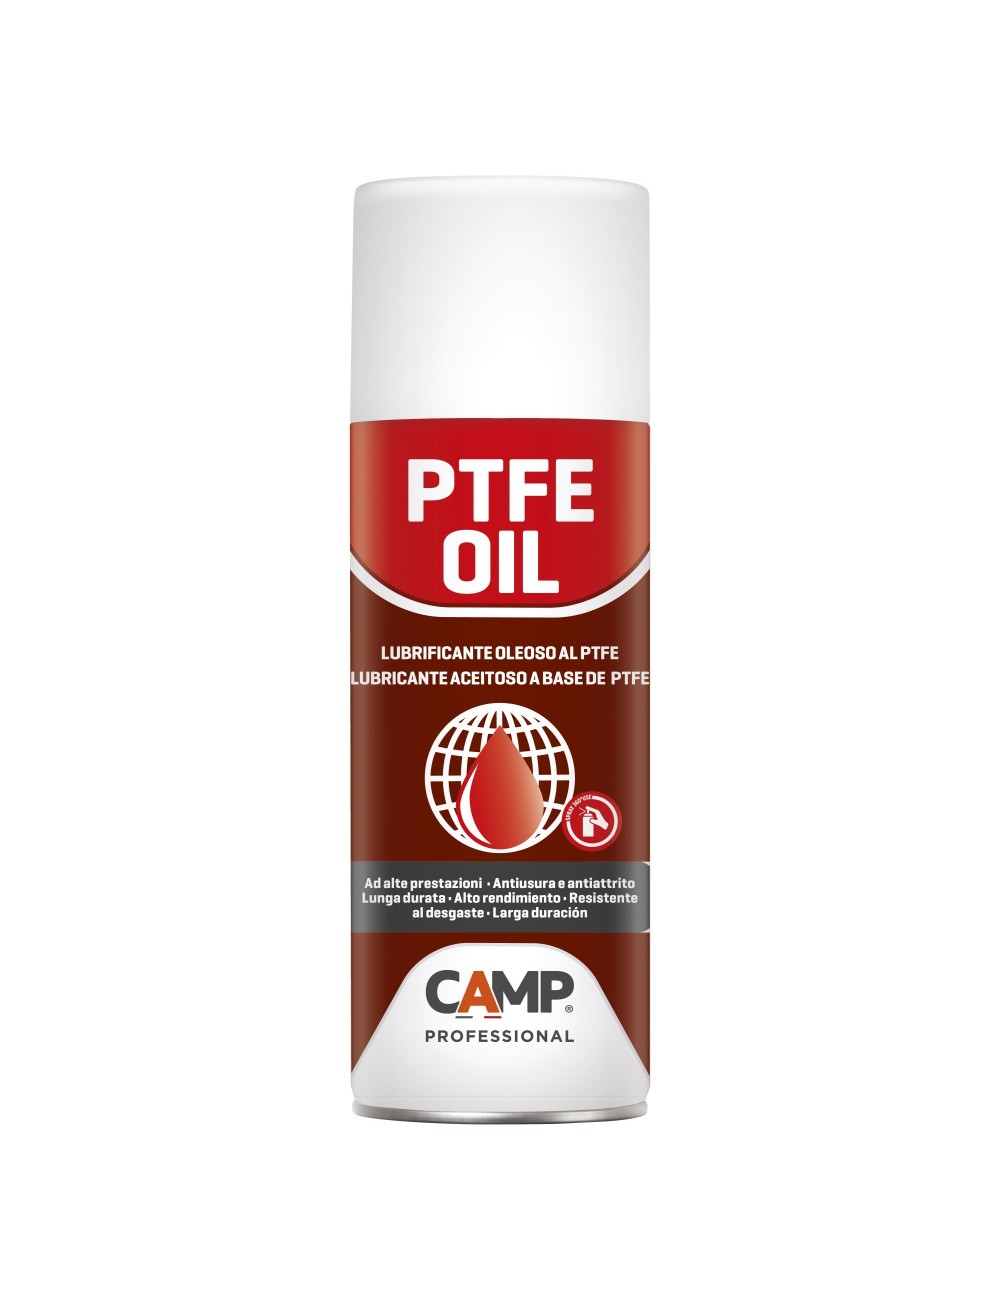 NILS Lubrificante Spray al PTFE Special Oil